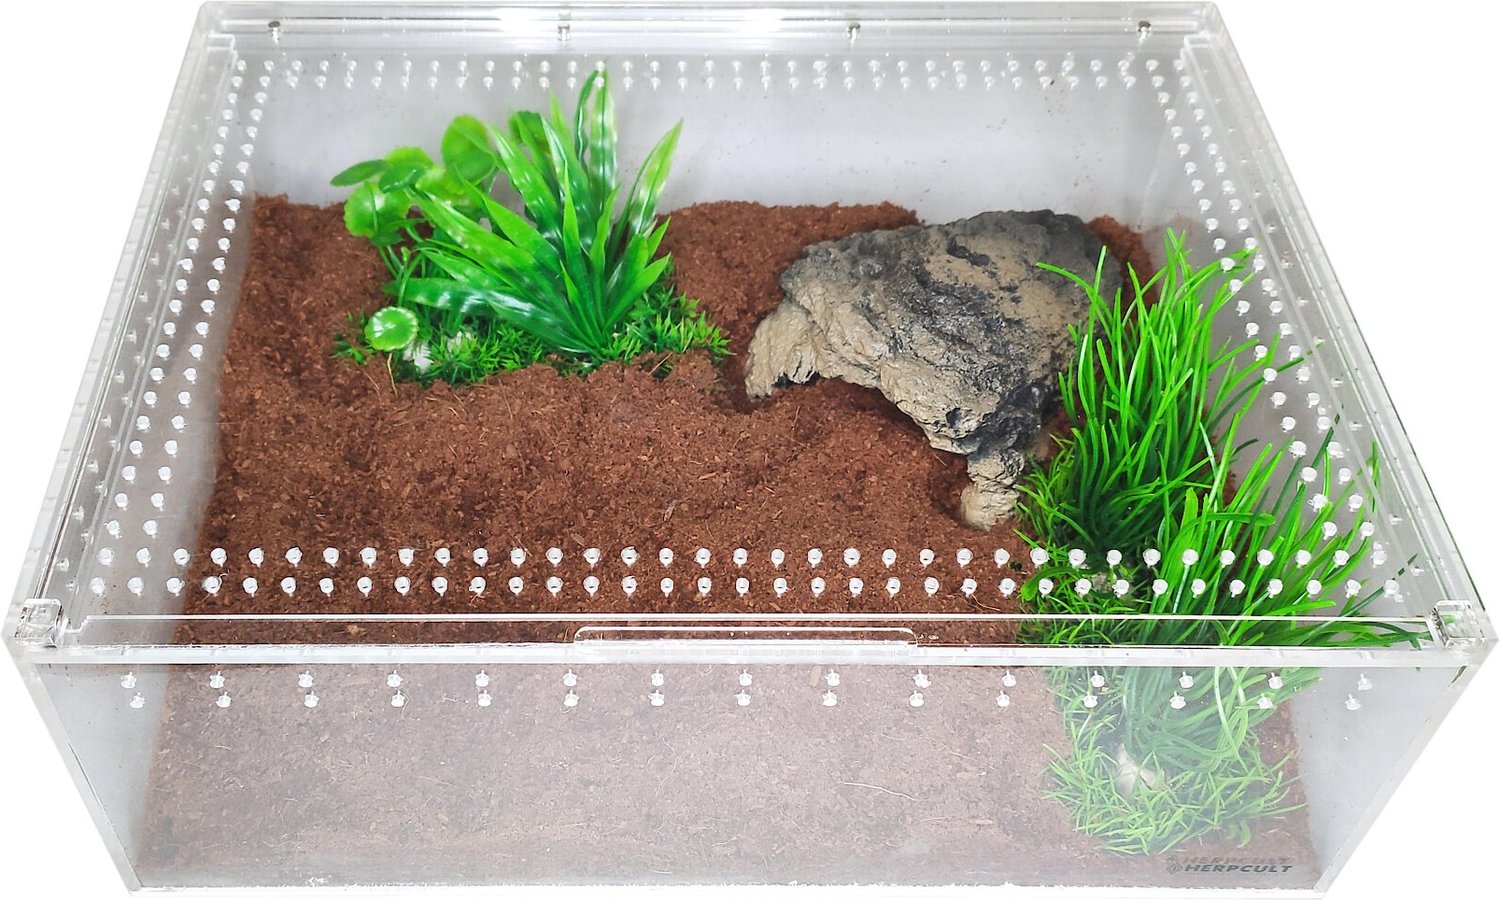 Herpcult Acrylic Reptile Terrarium Gecko Lizard Snake Spider Vivarium Cage Tank 